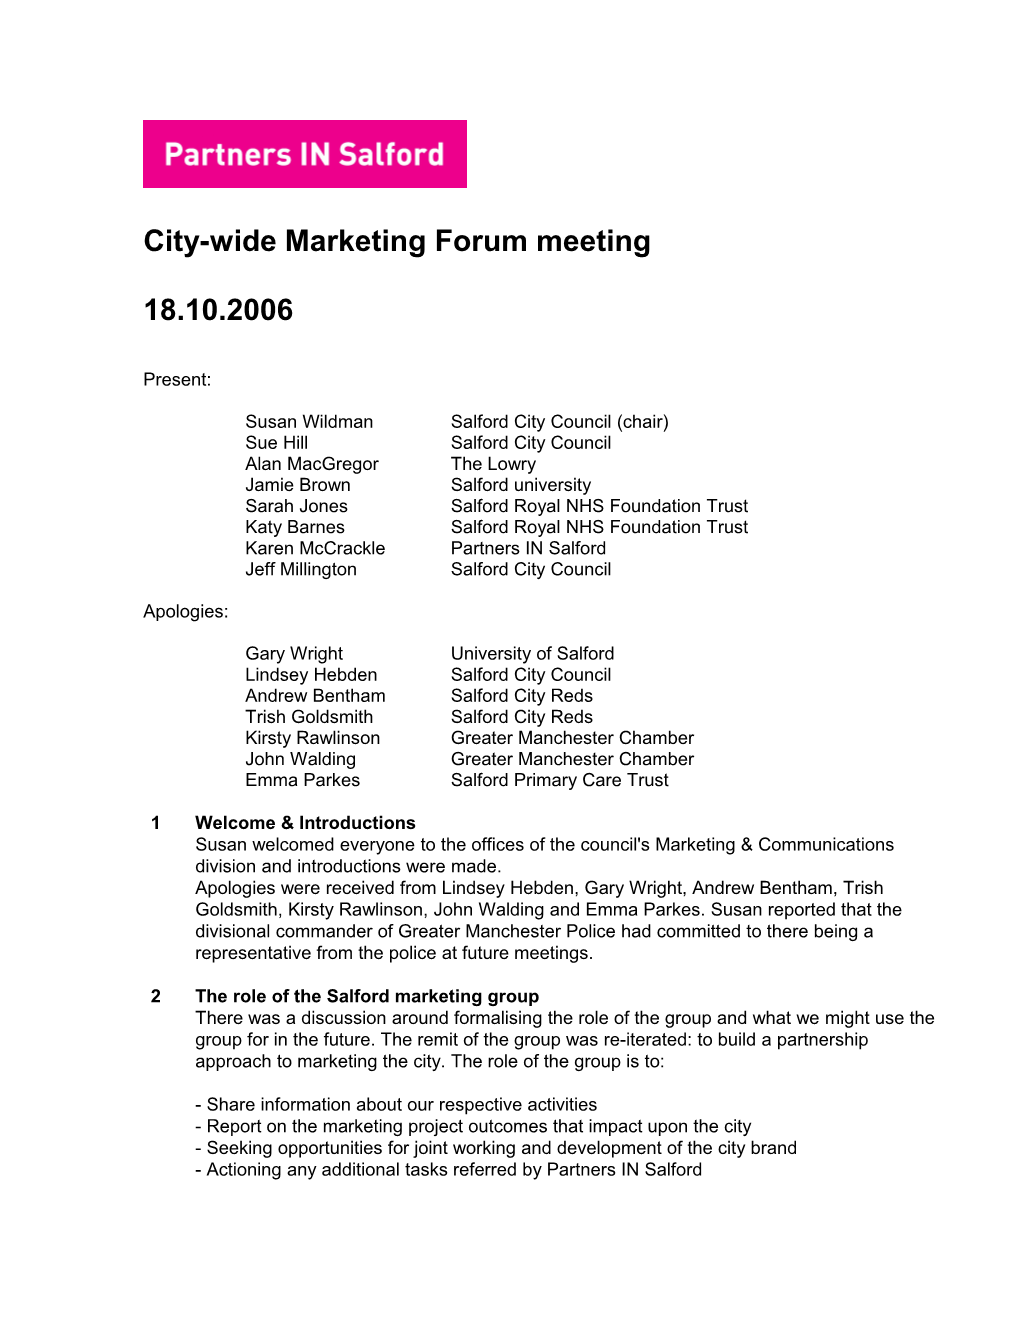 City-Wide Marketing Forum Meeting